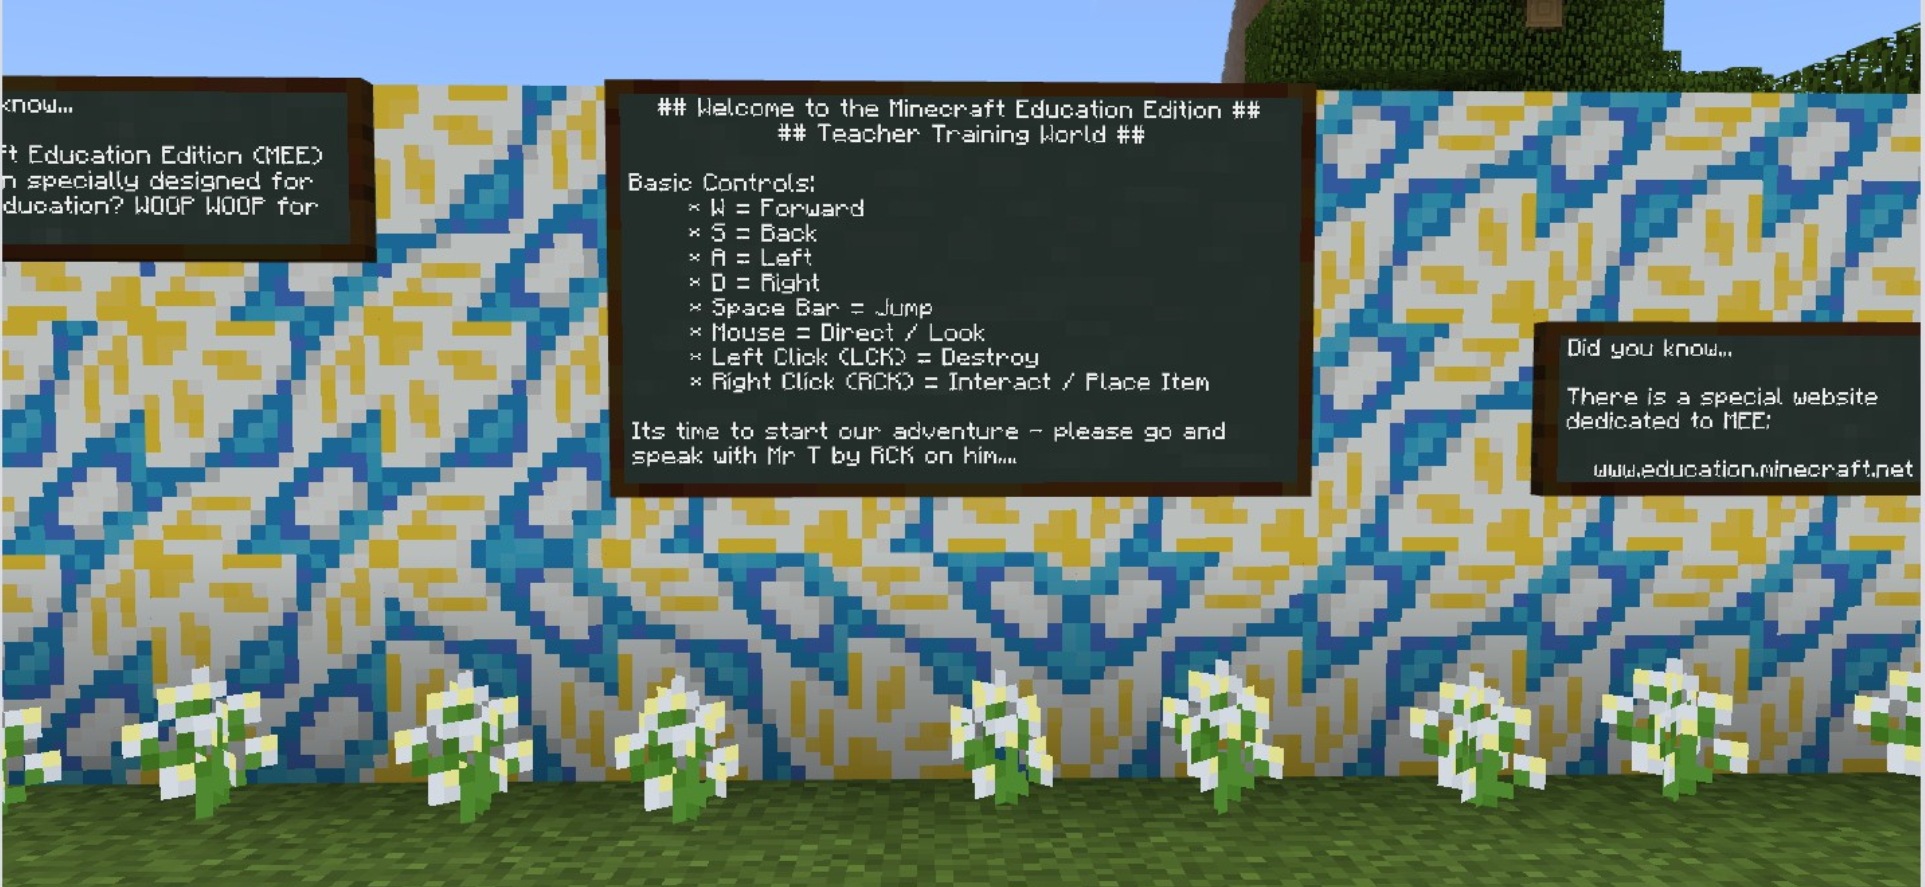 Teacher Training World Minecraft Education Edition